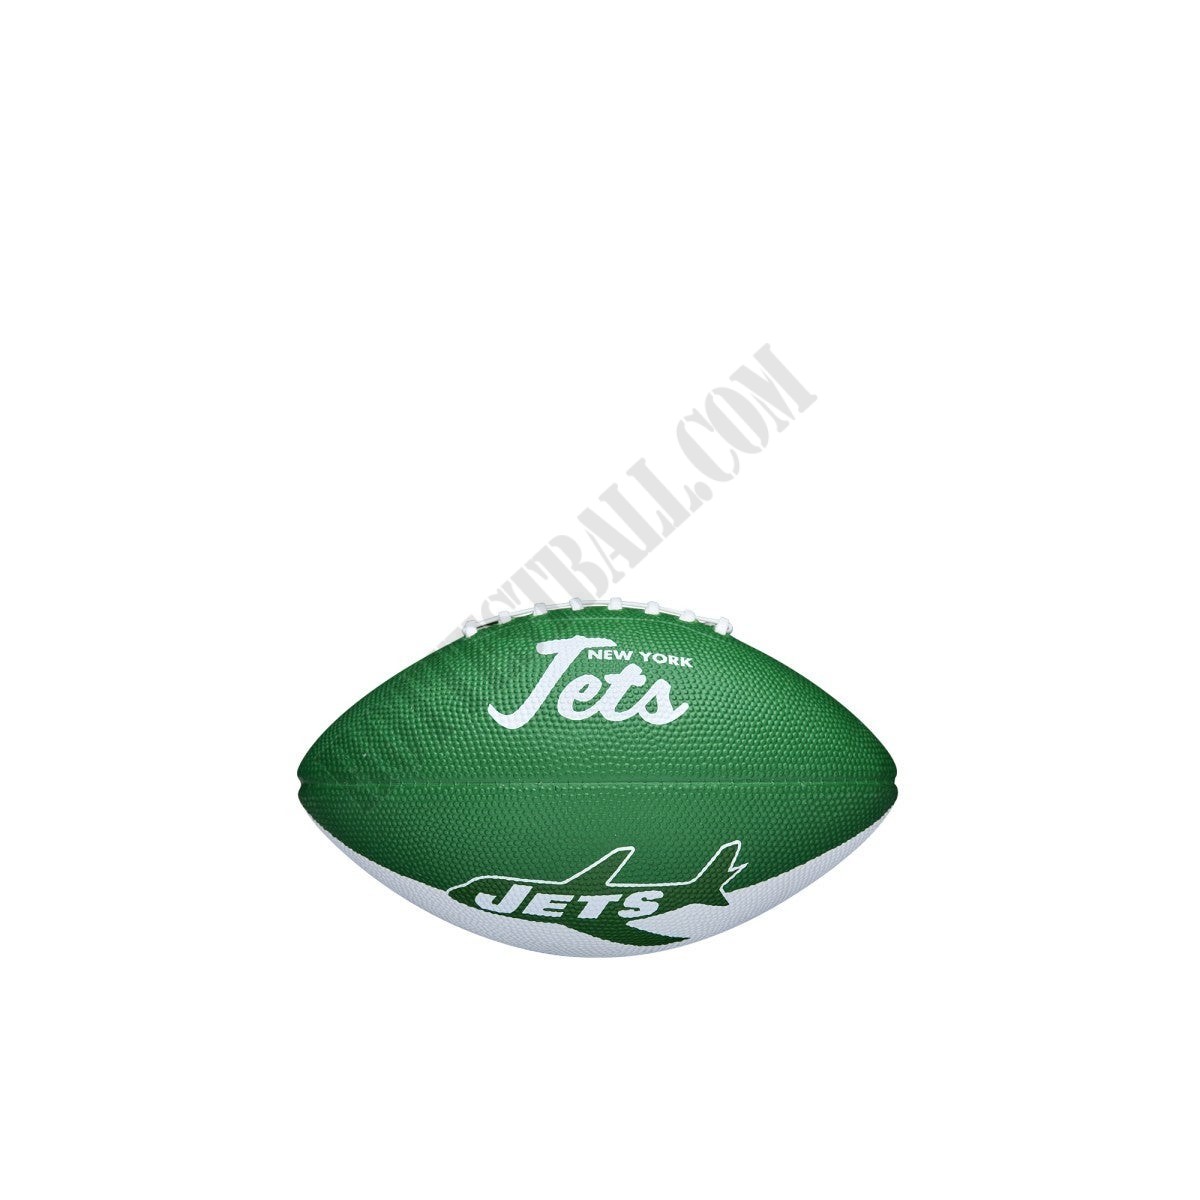 NFL Retro Mini Football - New York Jets ● Wilson Promotions - -4